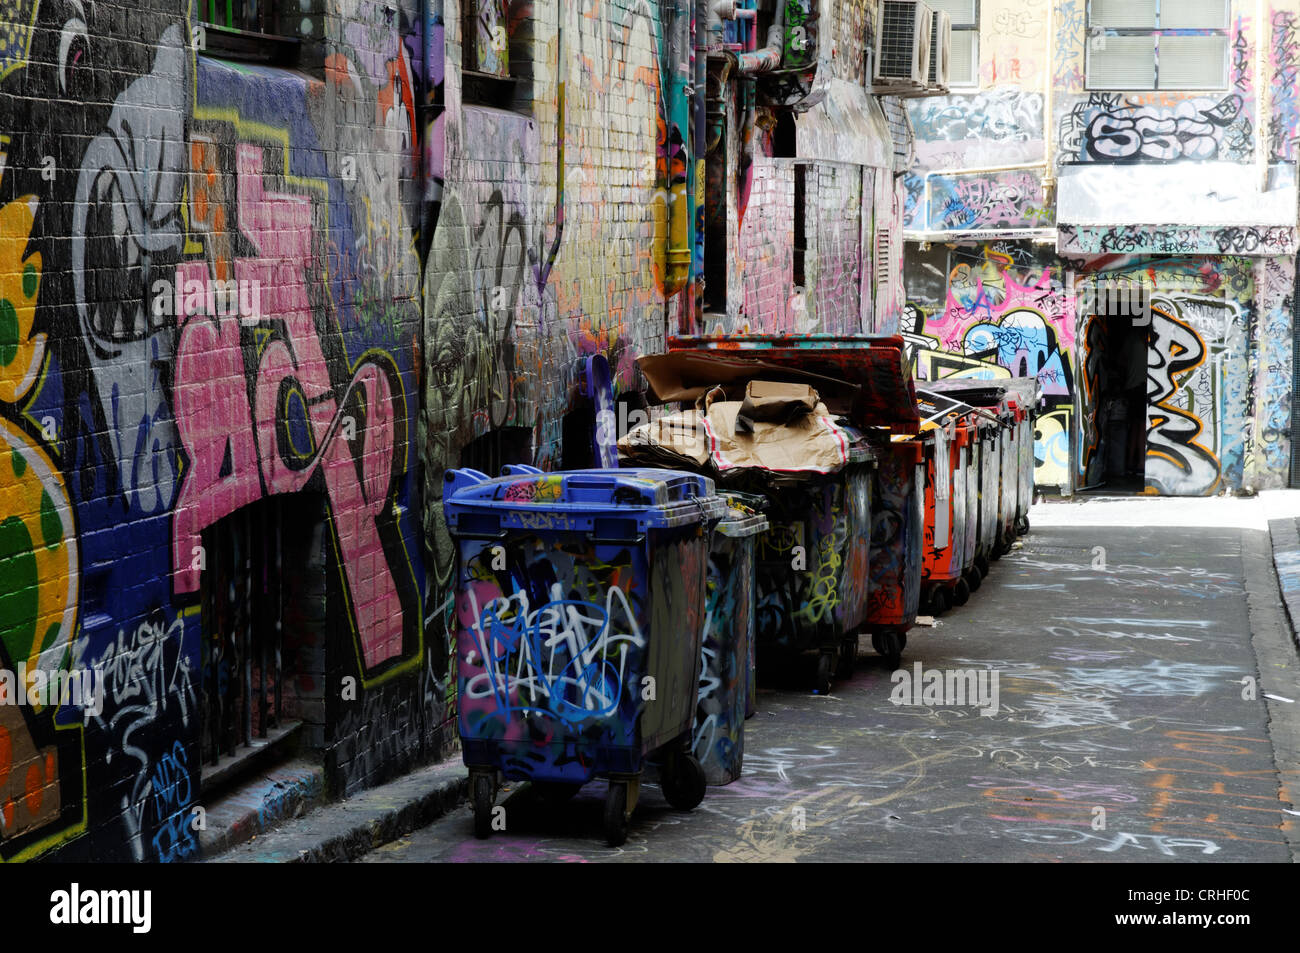 The heavily graffitied Union Lane in Melbourne Australia Stock Photo